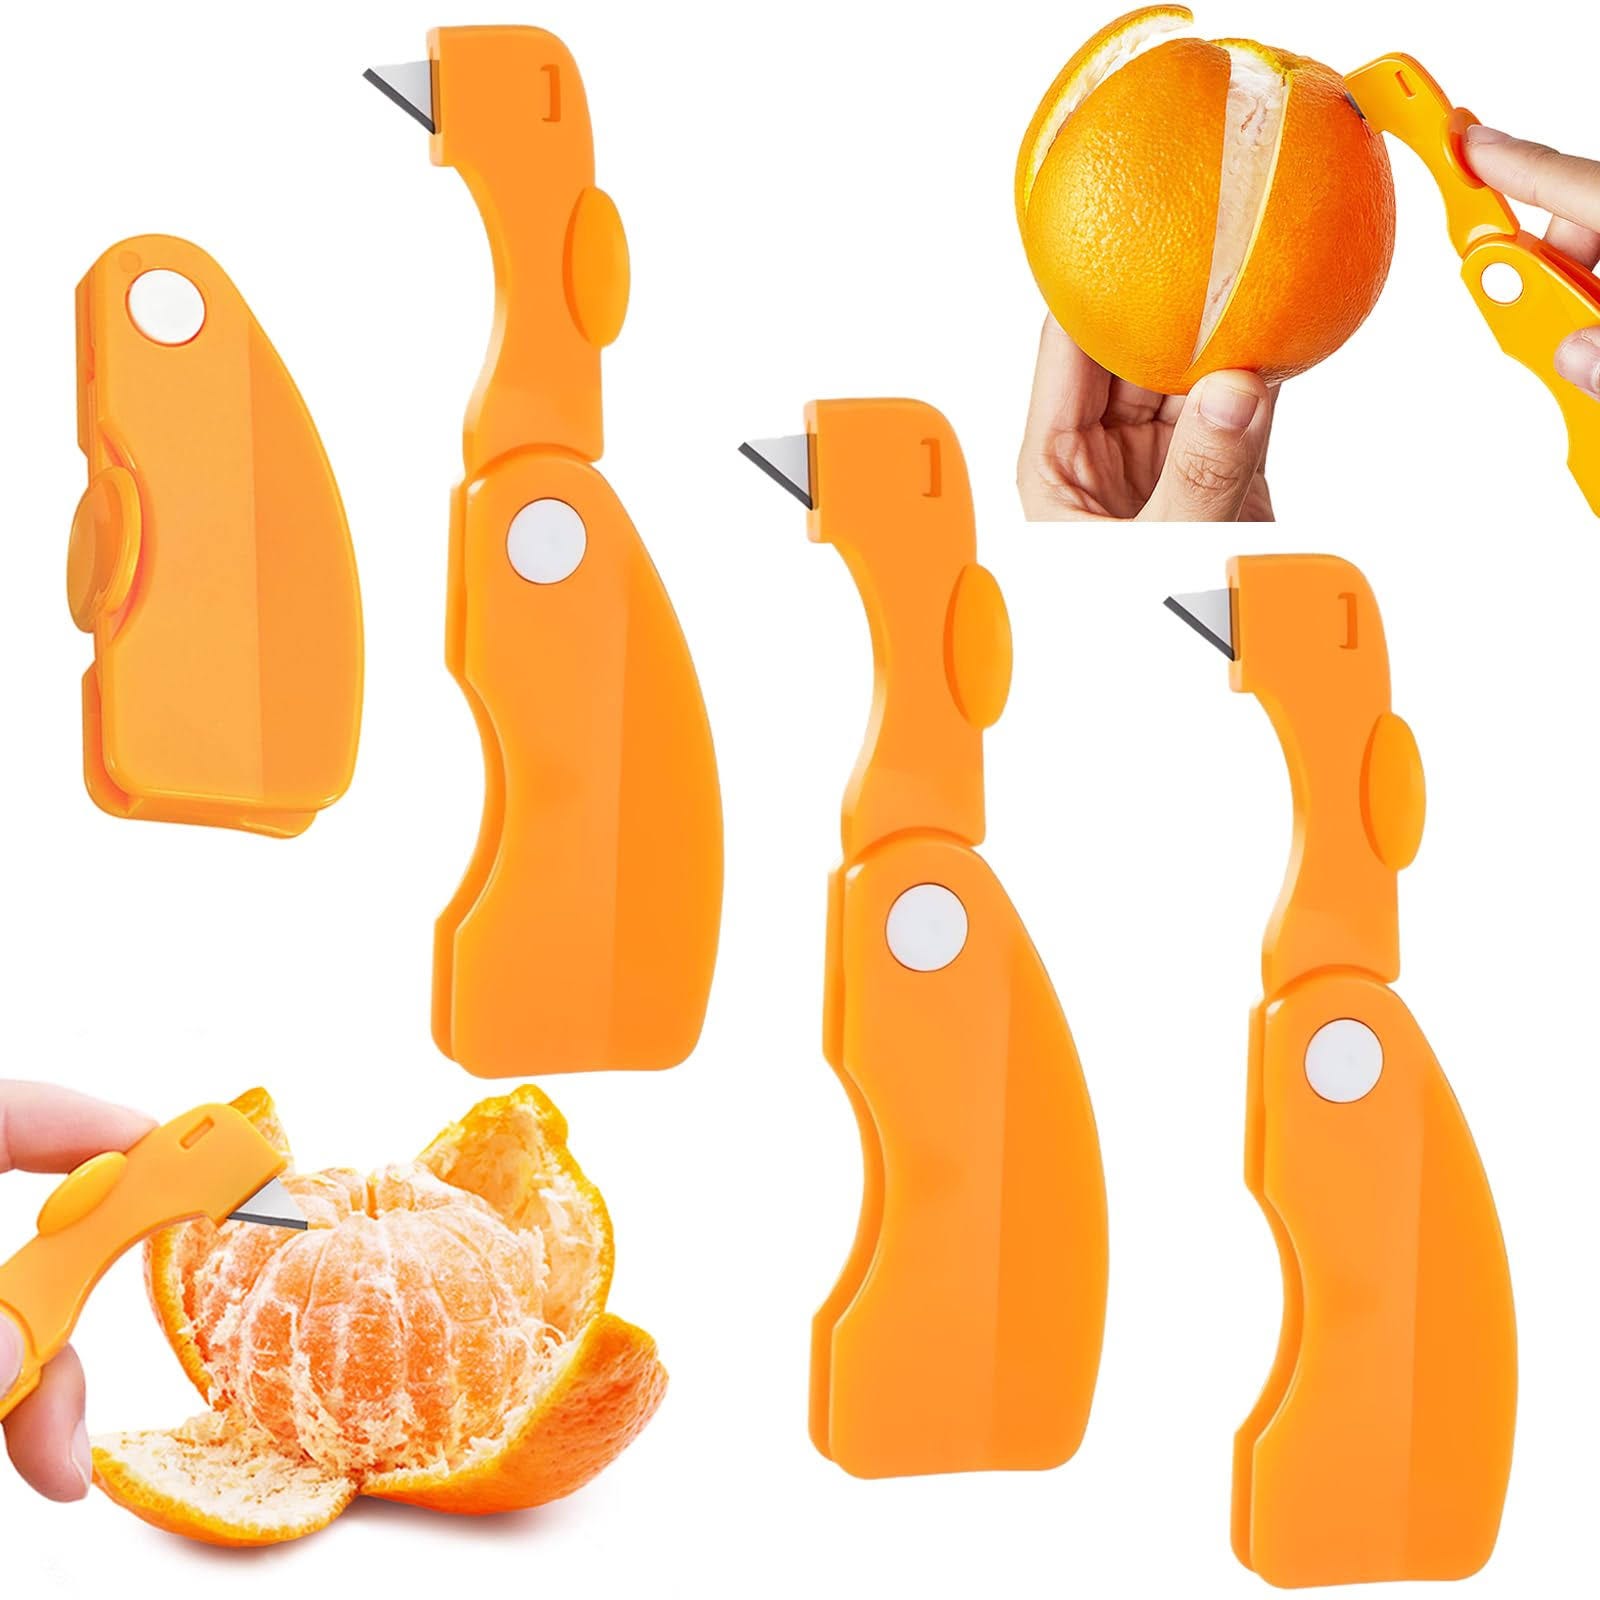 Easy-to-Use Orange and Citrus Peeler Gadget | Image